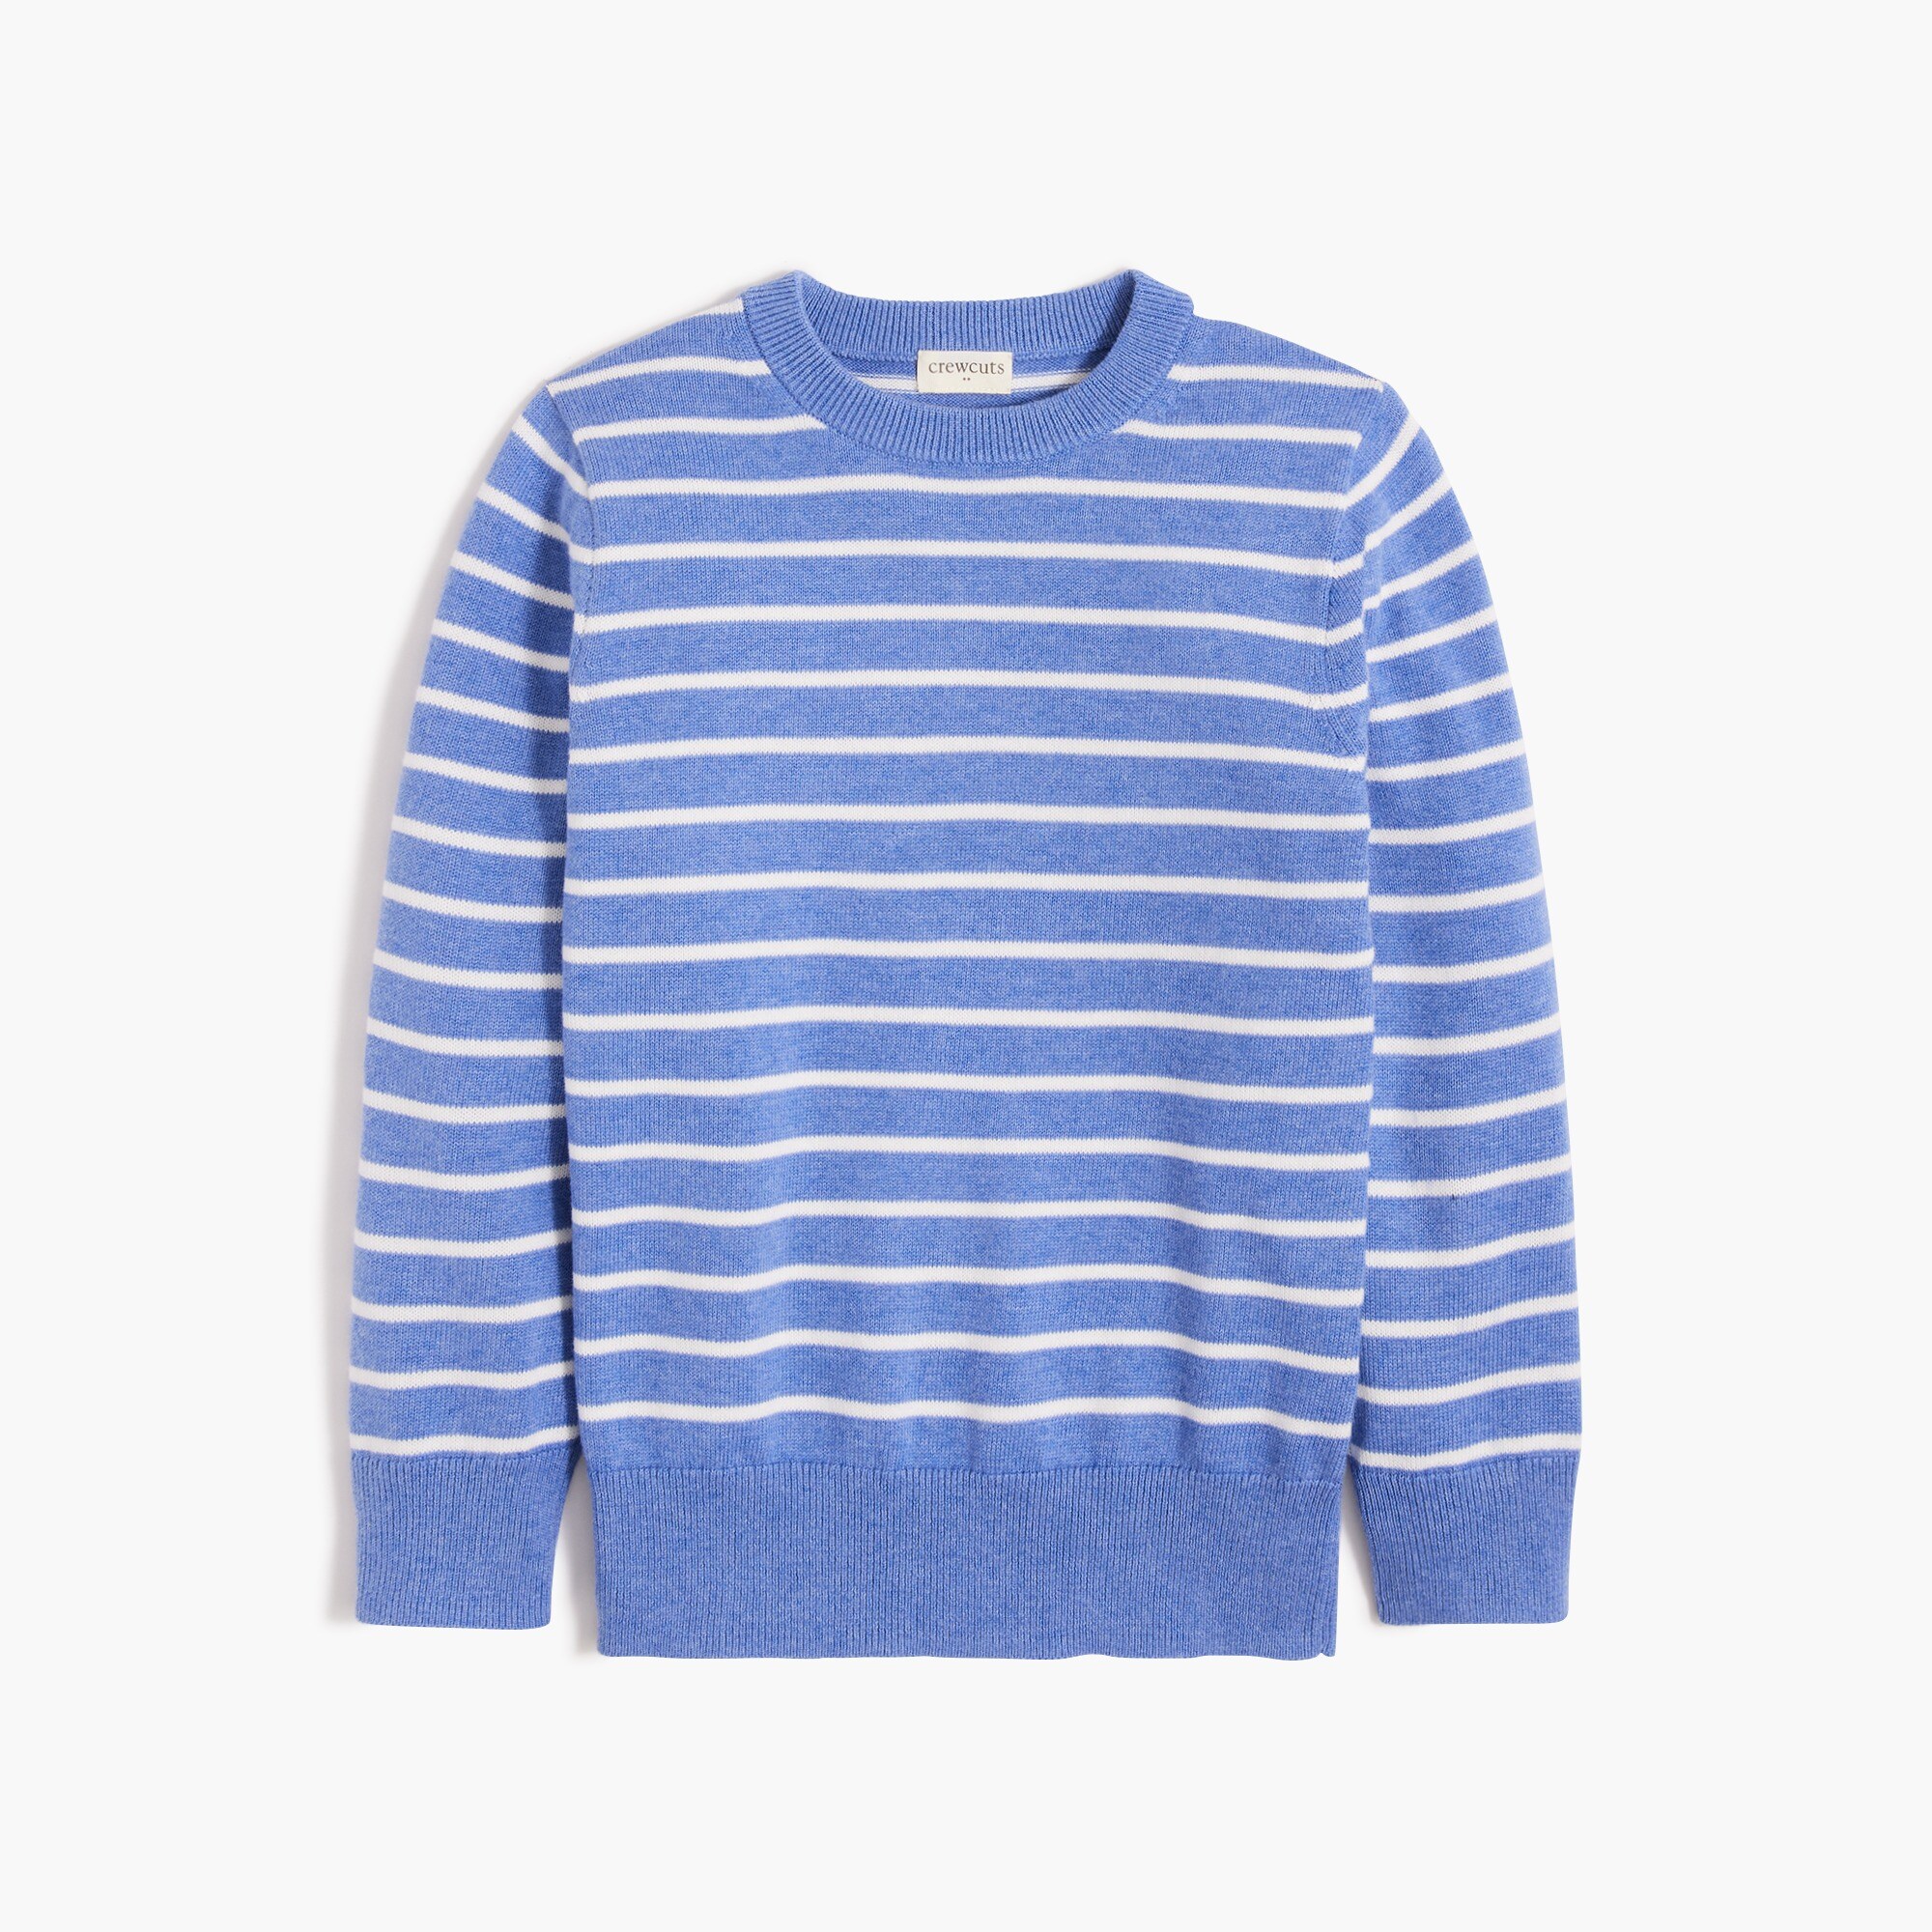  Boys' striped cotton crewneck pullover